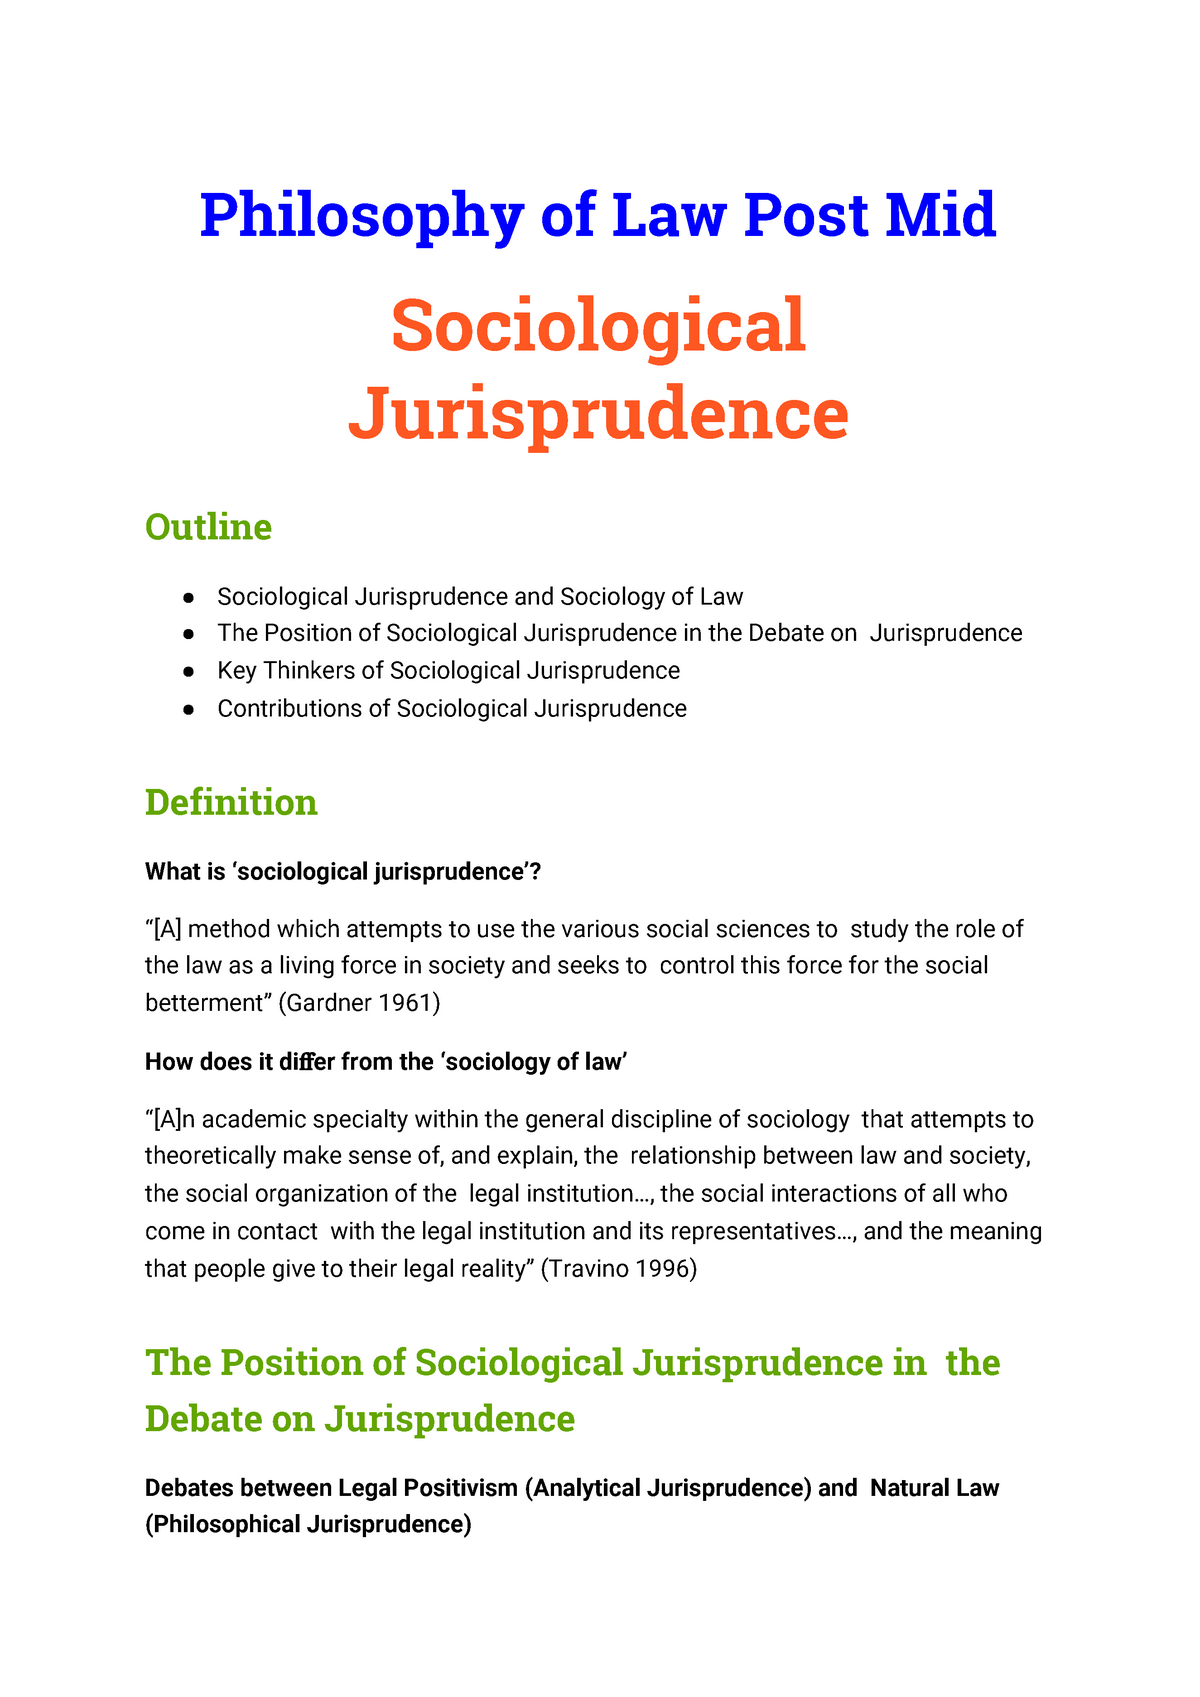 sociological jurisprudence thesis